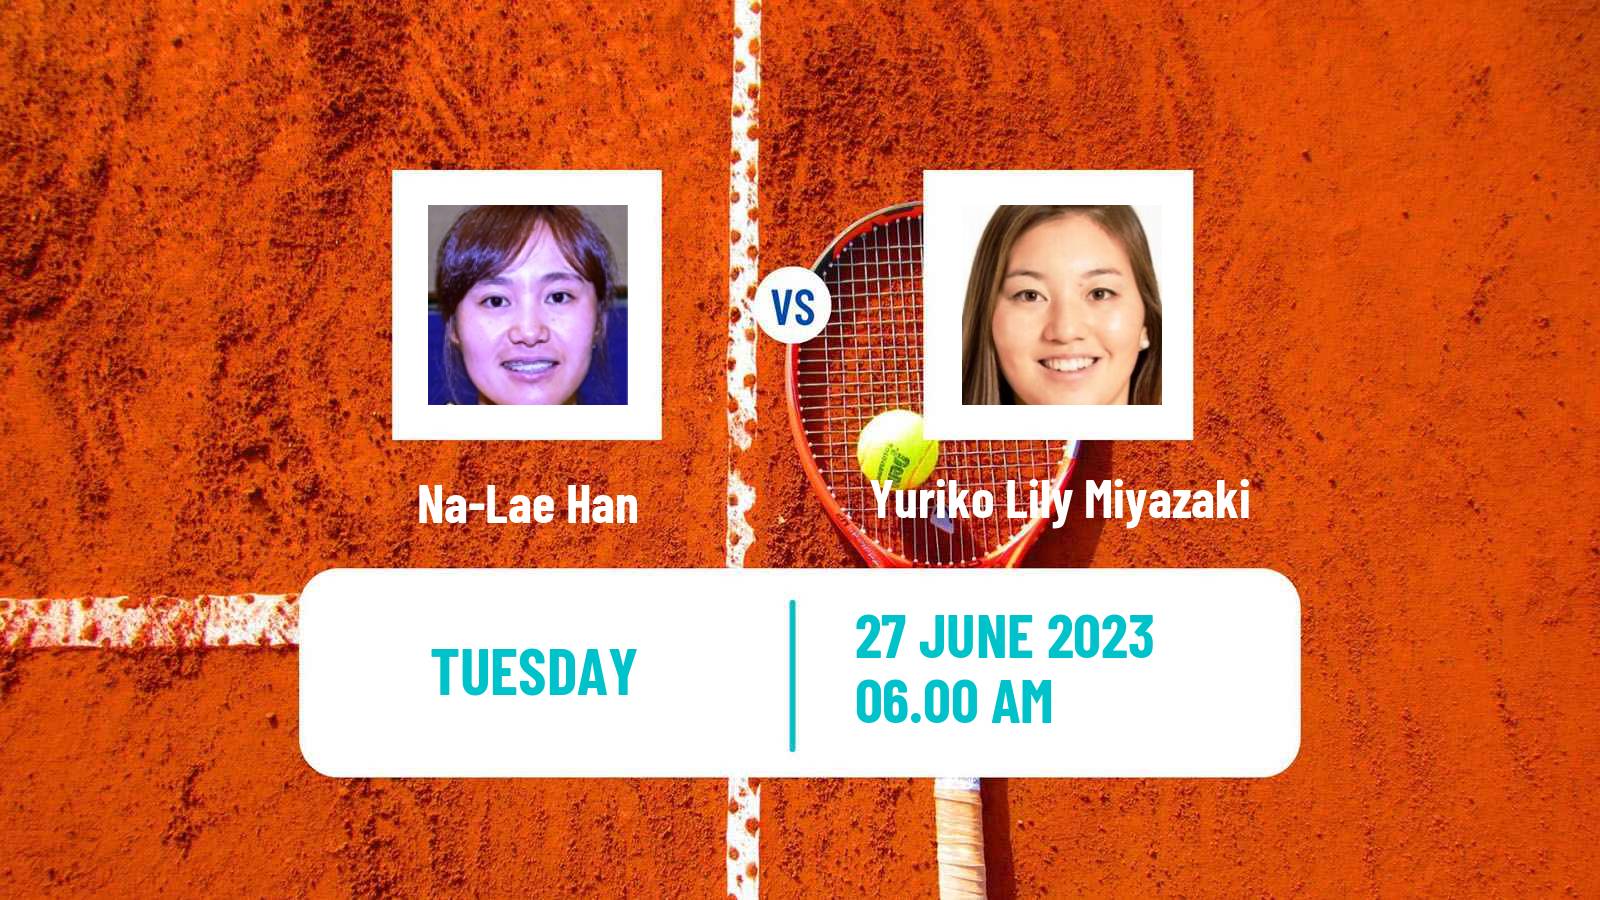 Tennis WTA Wimbledon Na-Lae Han - Yuriko Lily Miyazaki